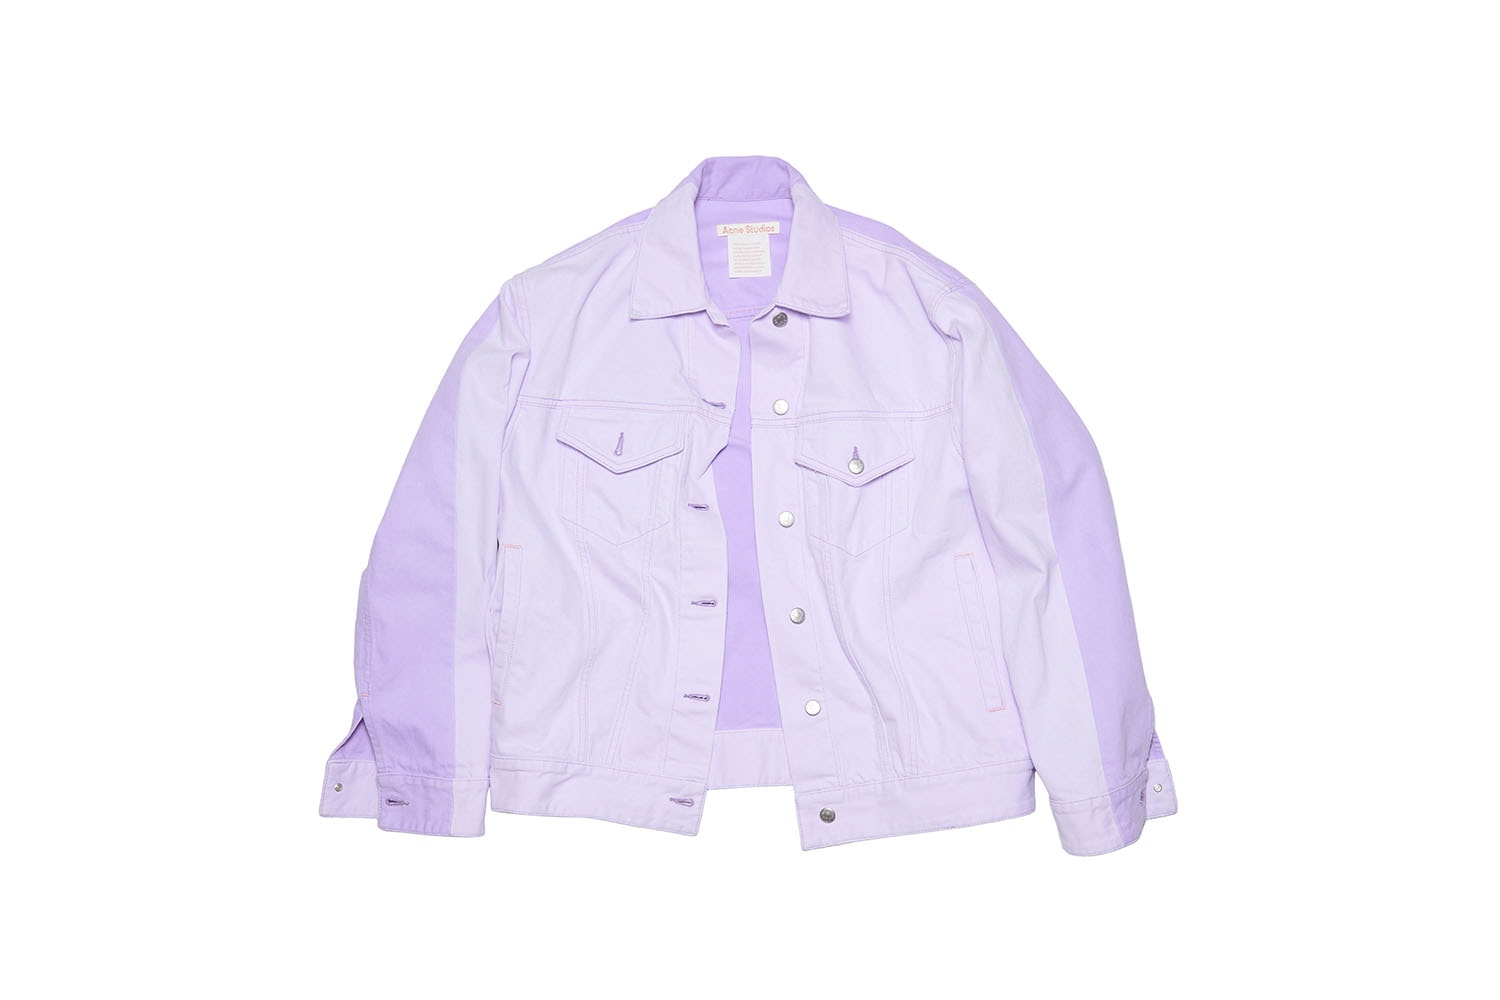 Acne Studios Season 4 Repurposed Fabrics Pieces Dresses Jackets Jeans Pants Shirts T-Shirts Purple Denim Patterns Florals